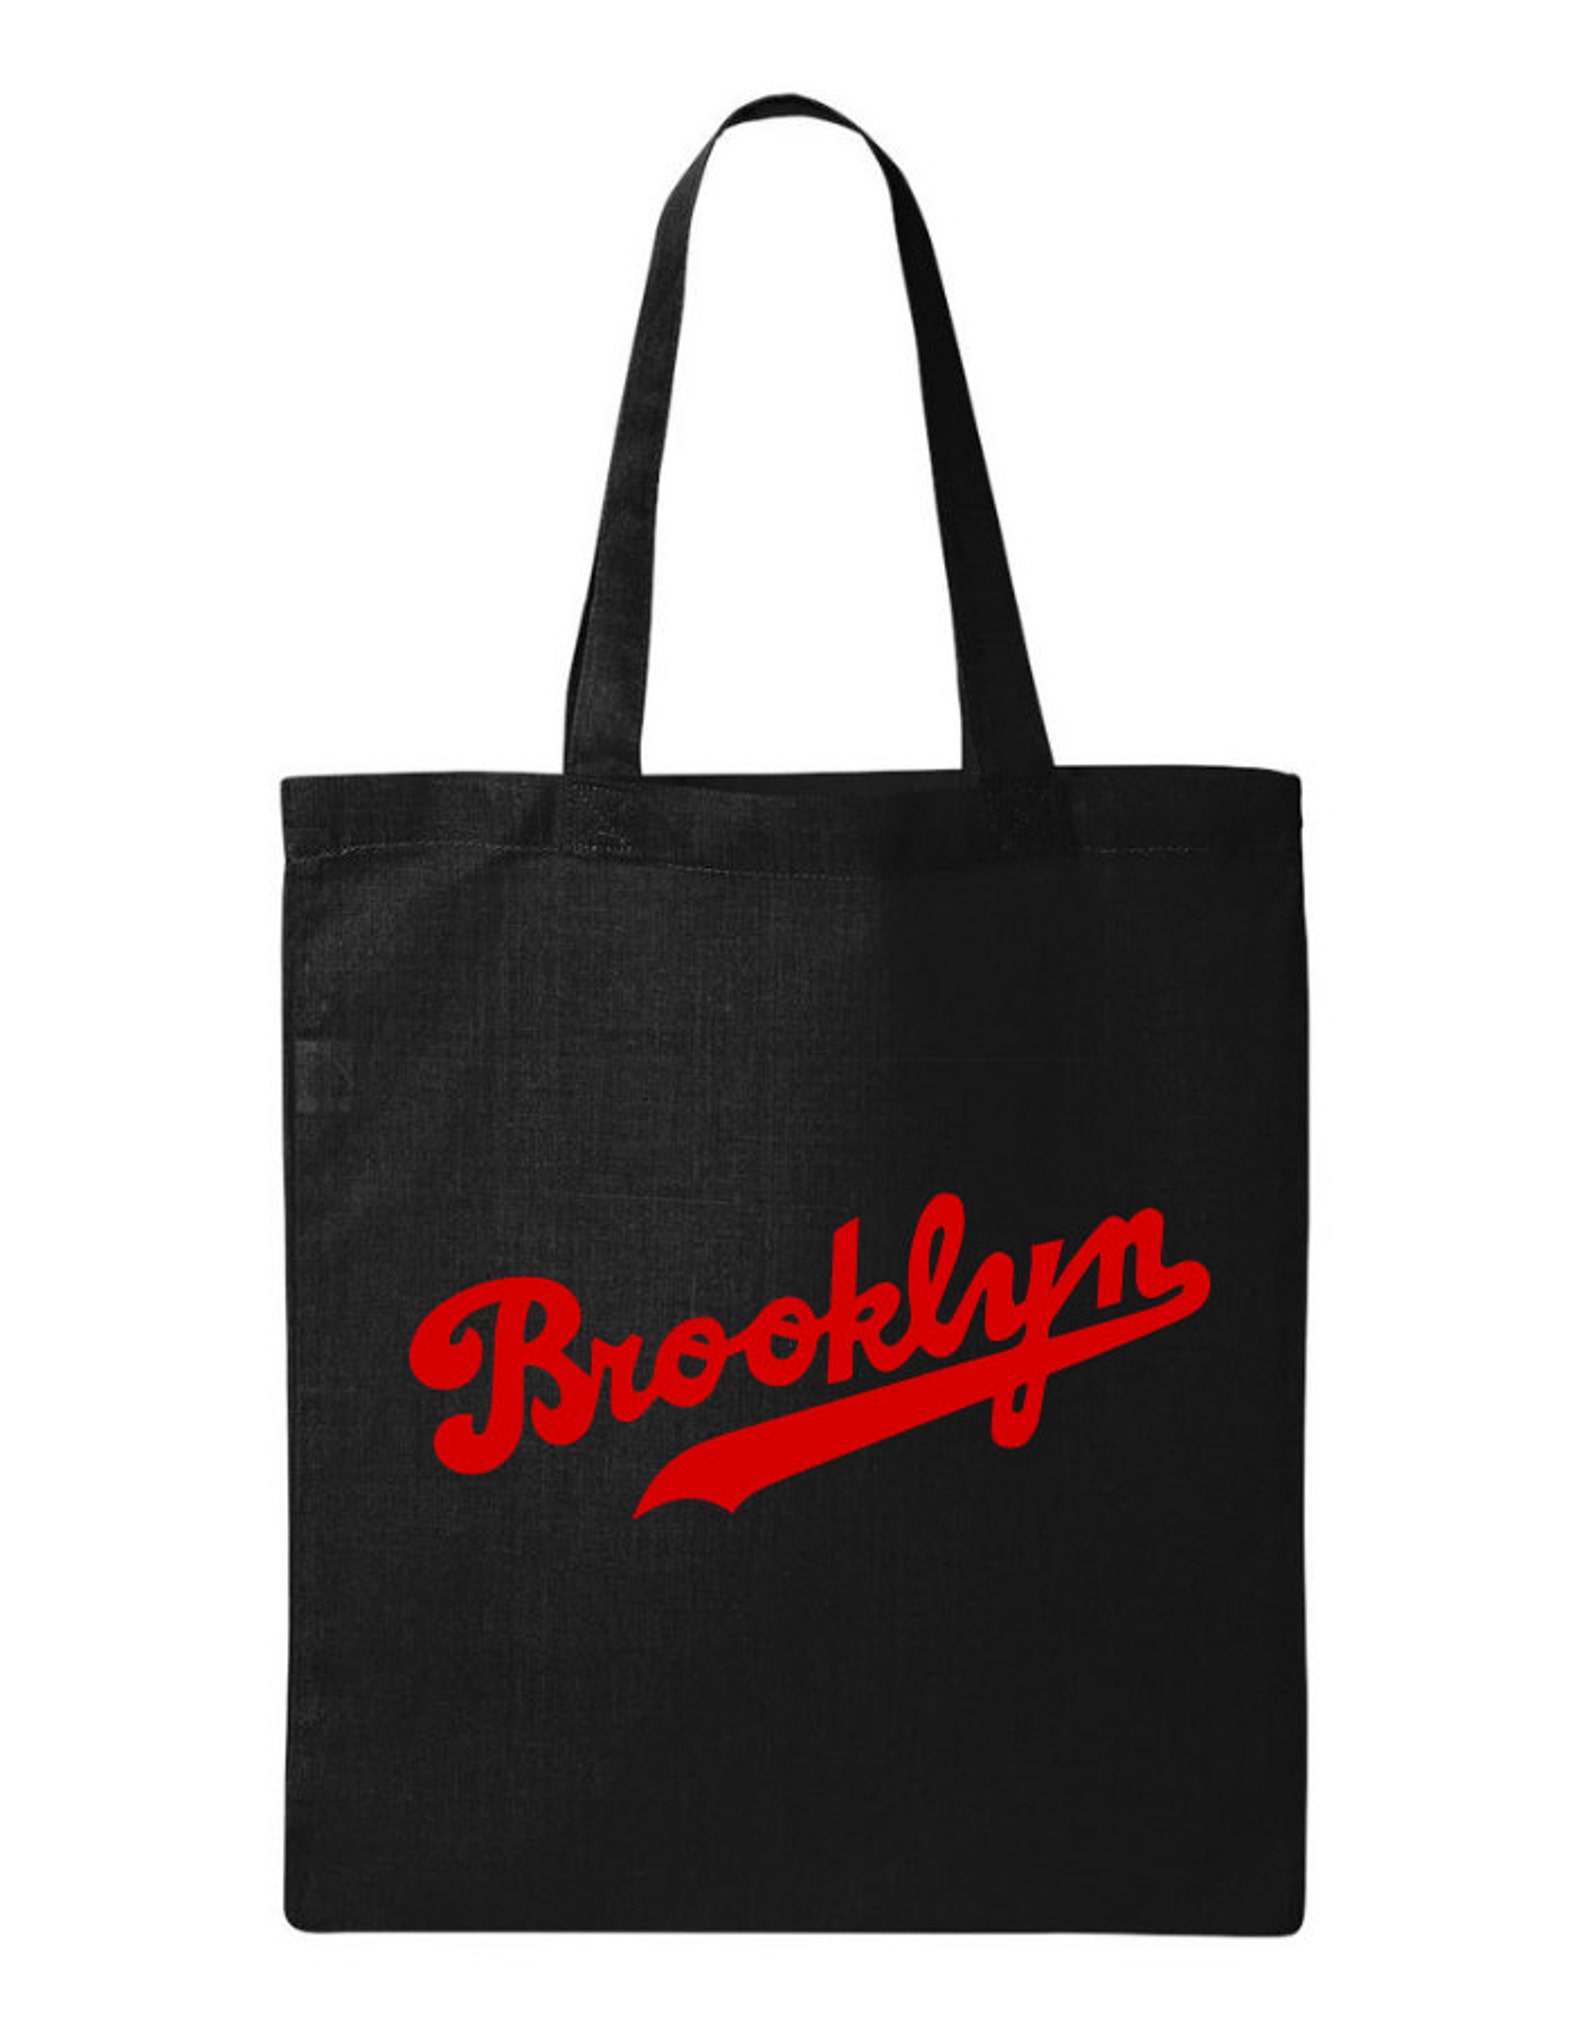 Brooklyn Tote Bag New York Tote Bag Brooklyn Tote Bag | Etsy